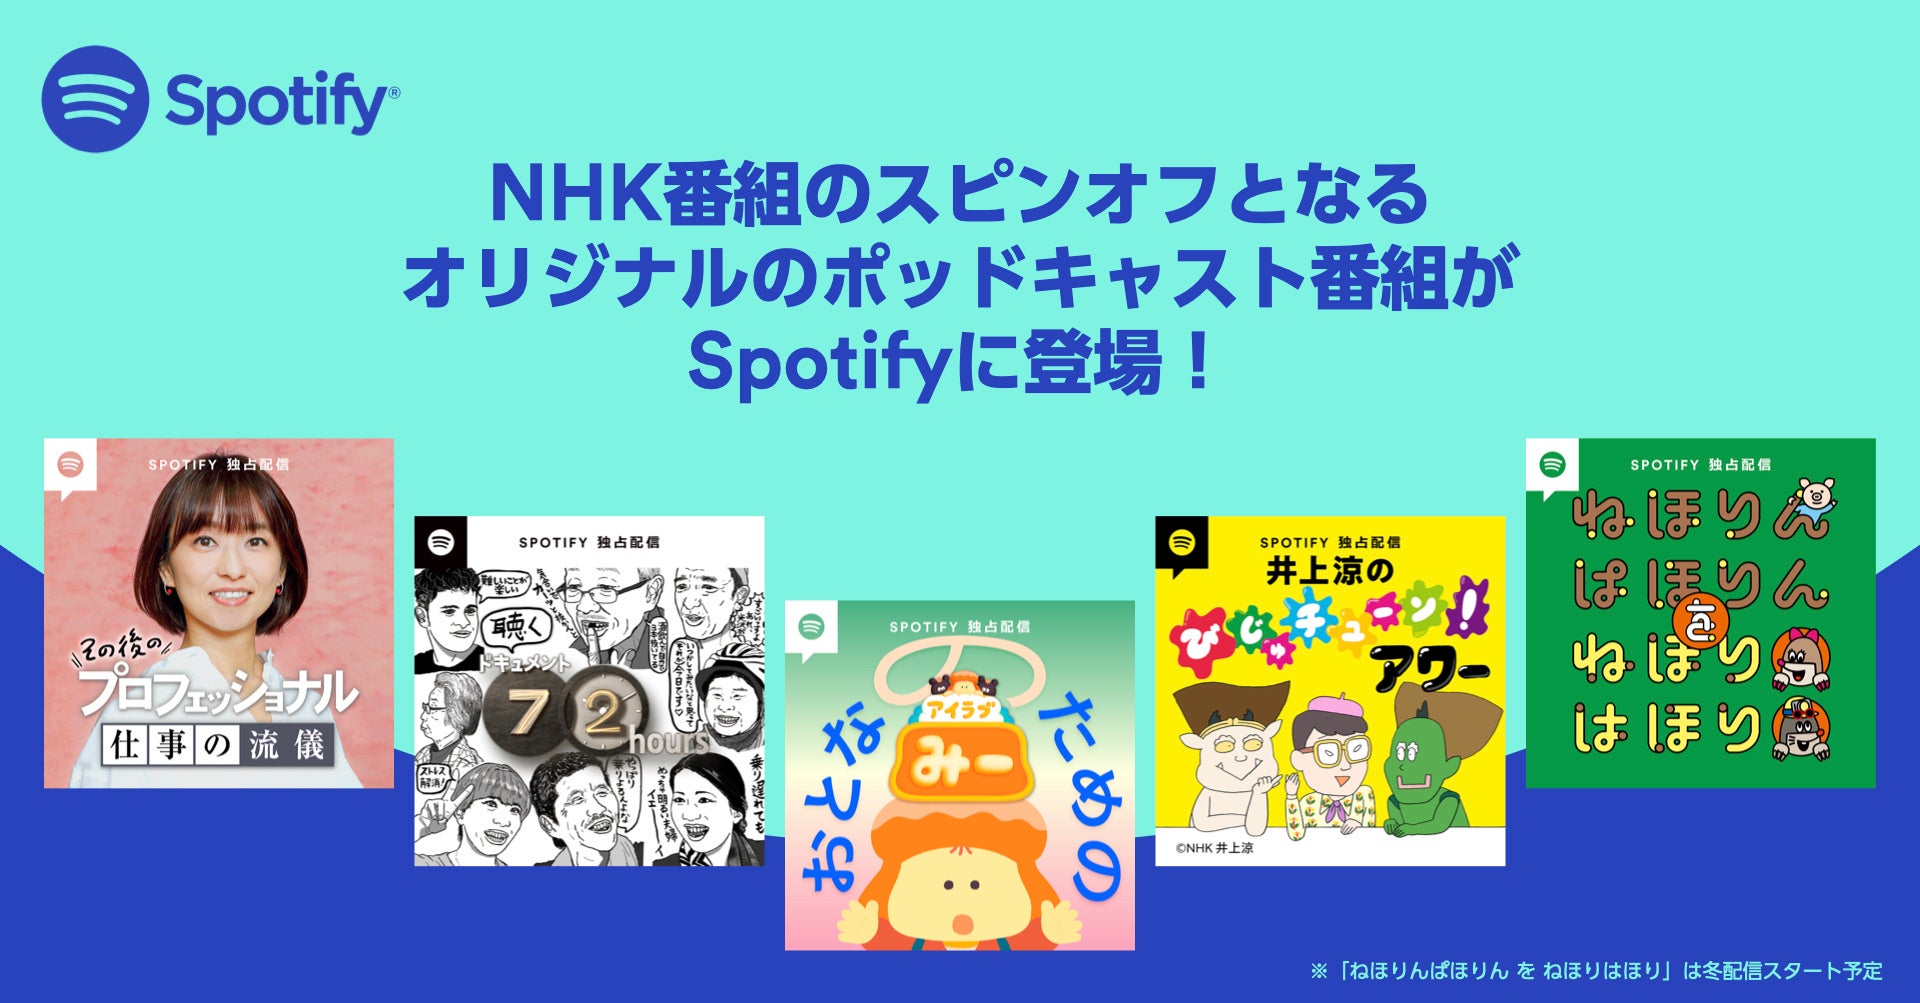 NHKエンタープライズおよびNHKエデュケーショナルが制作するポッドキャスト5番組をSpotifyにて独占配信